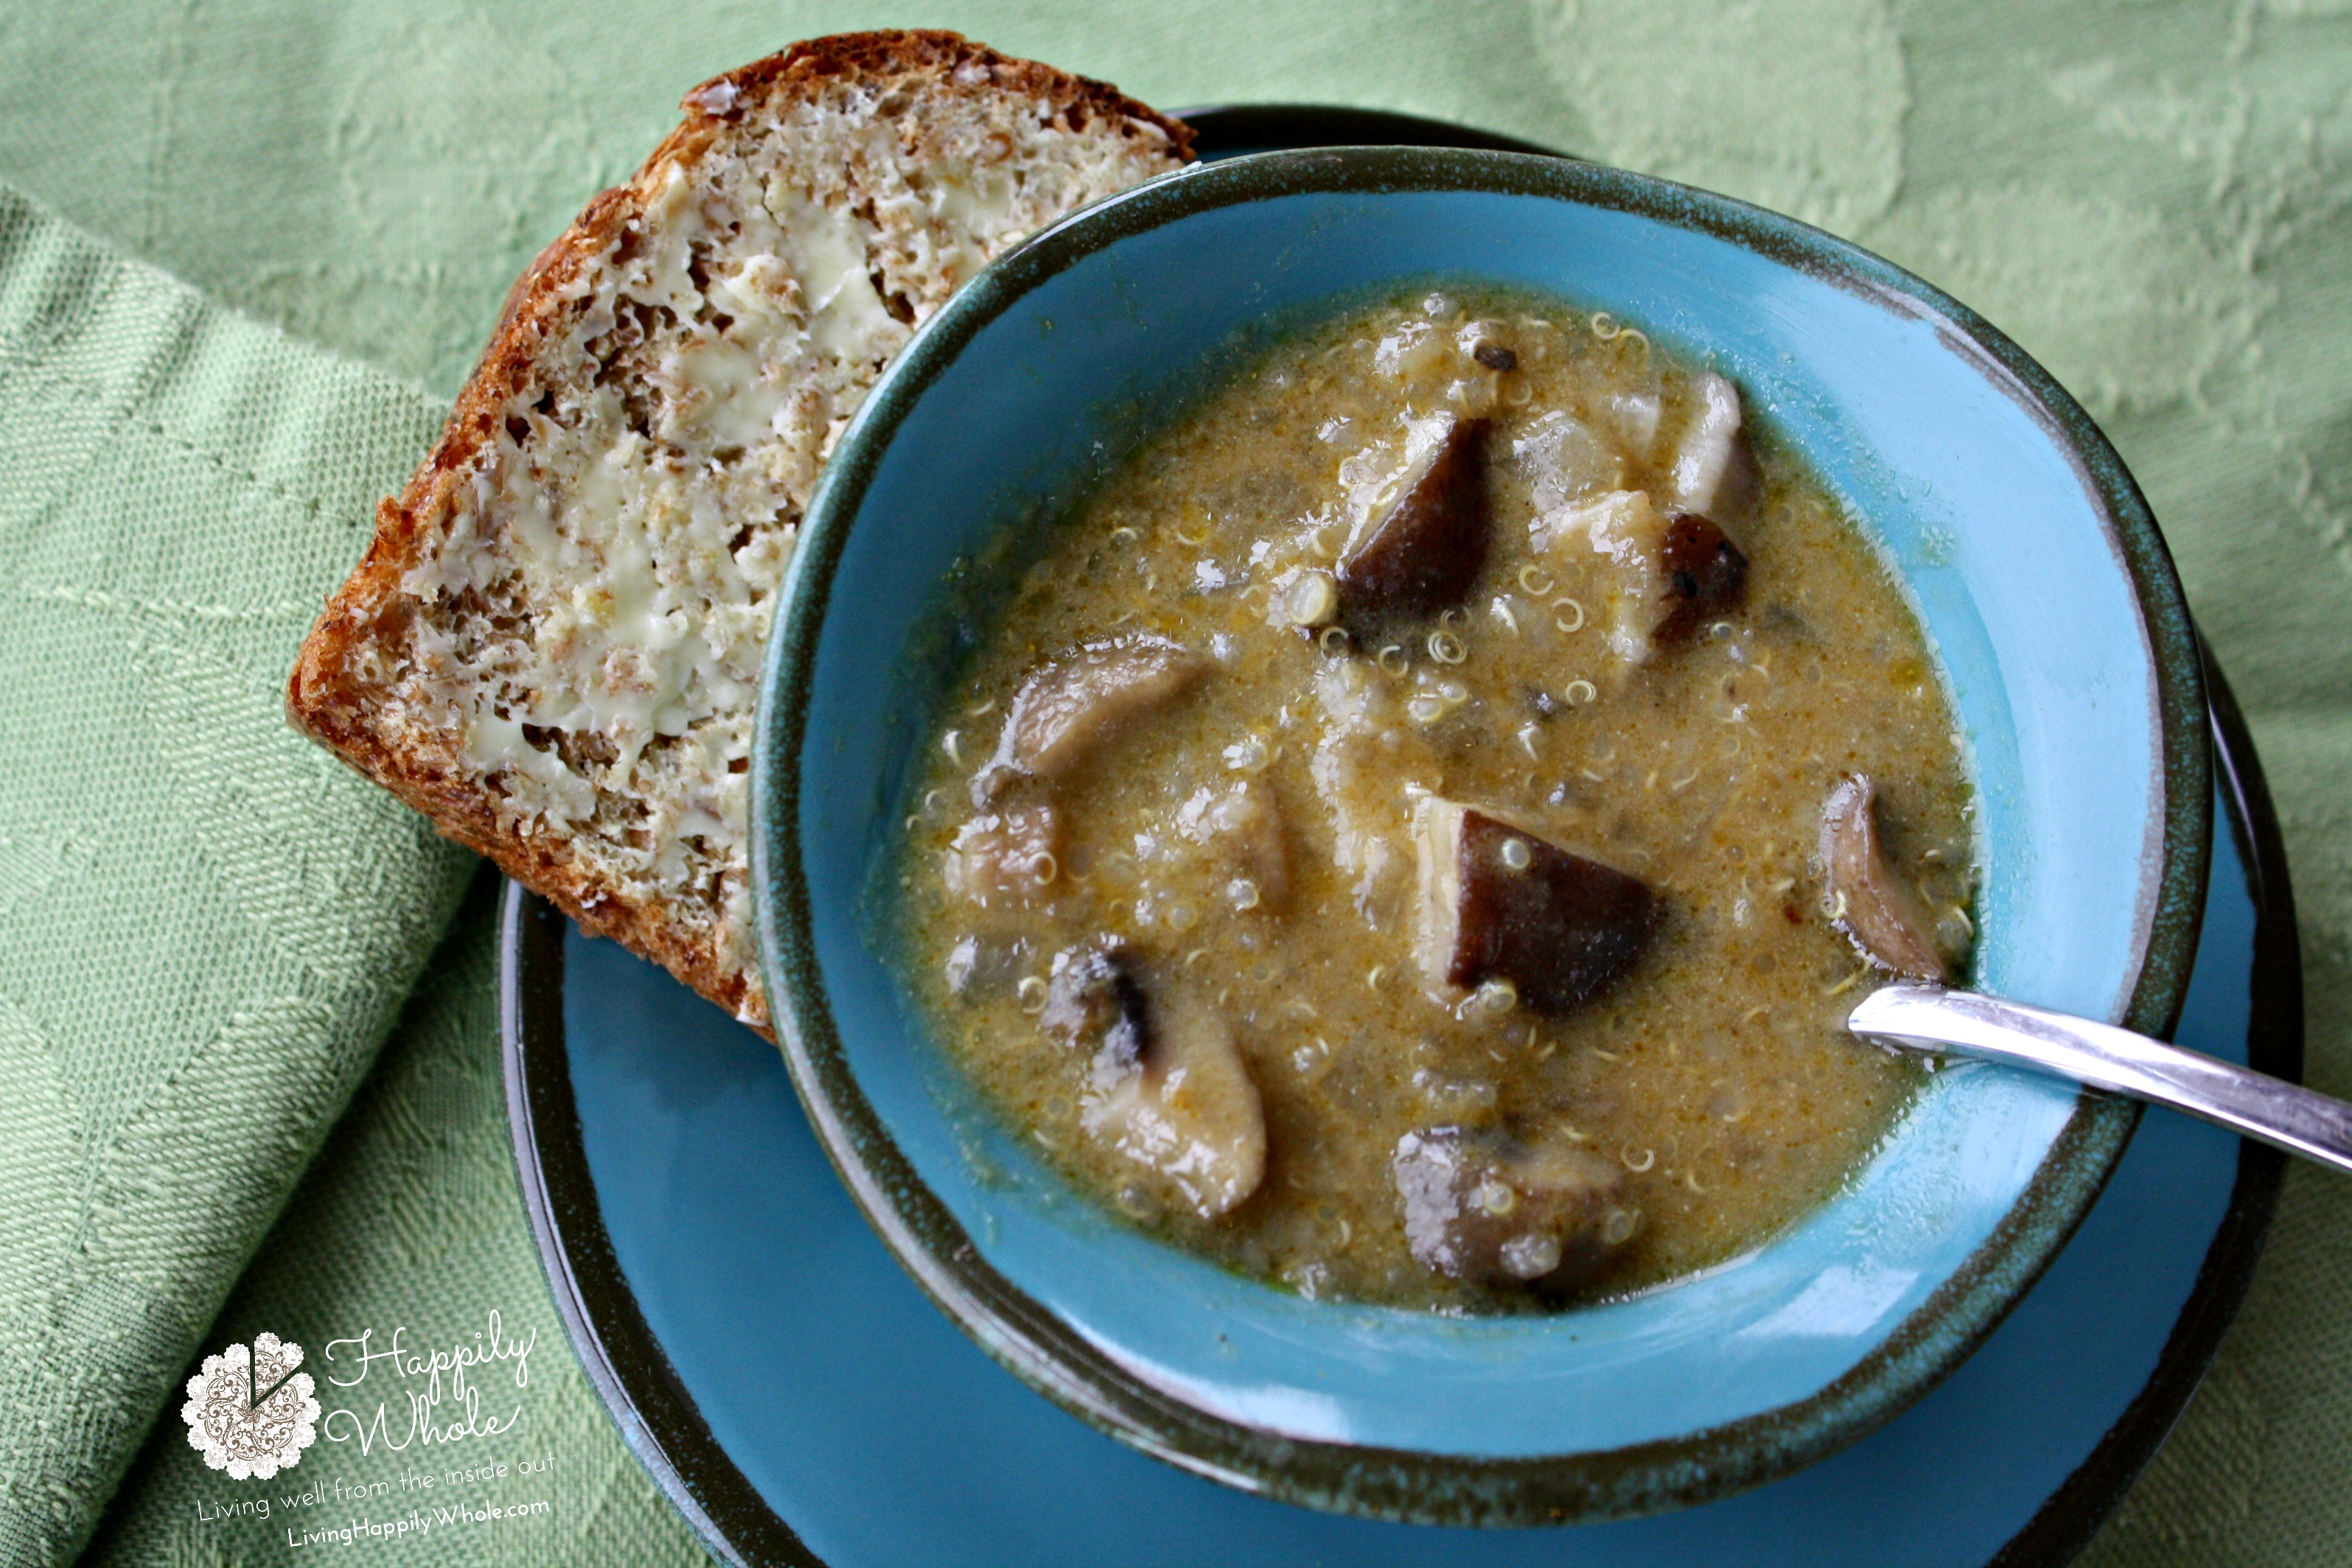 Creamy Mushroom Quinoa Soup with Coconut Broth